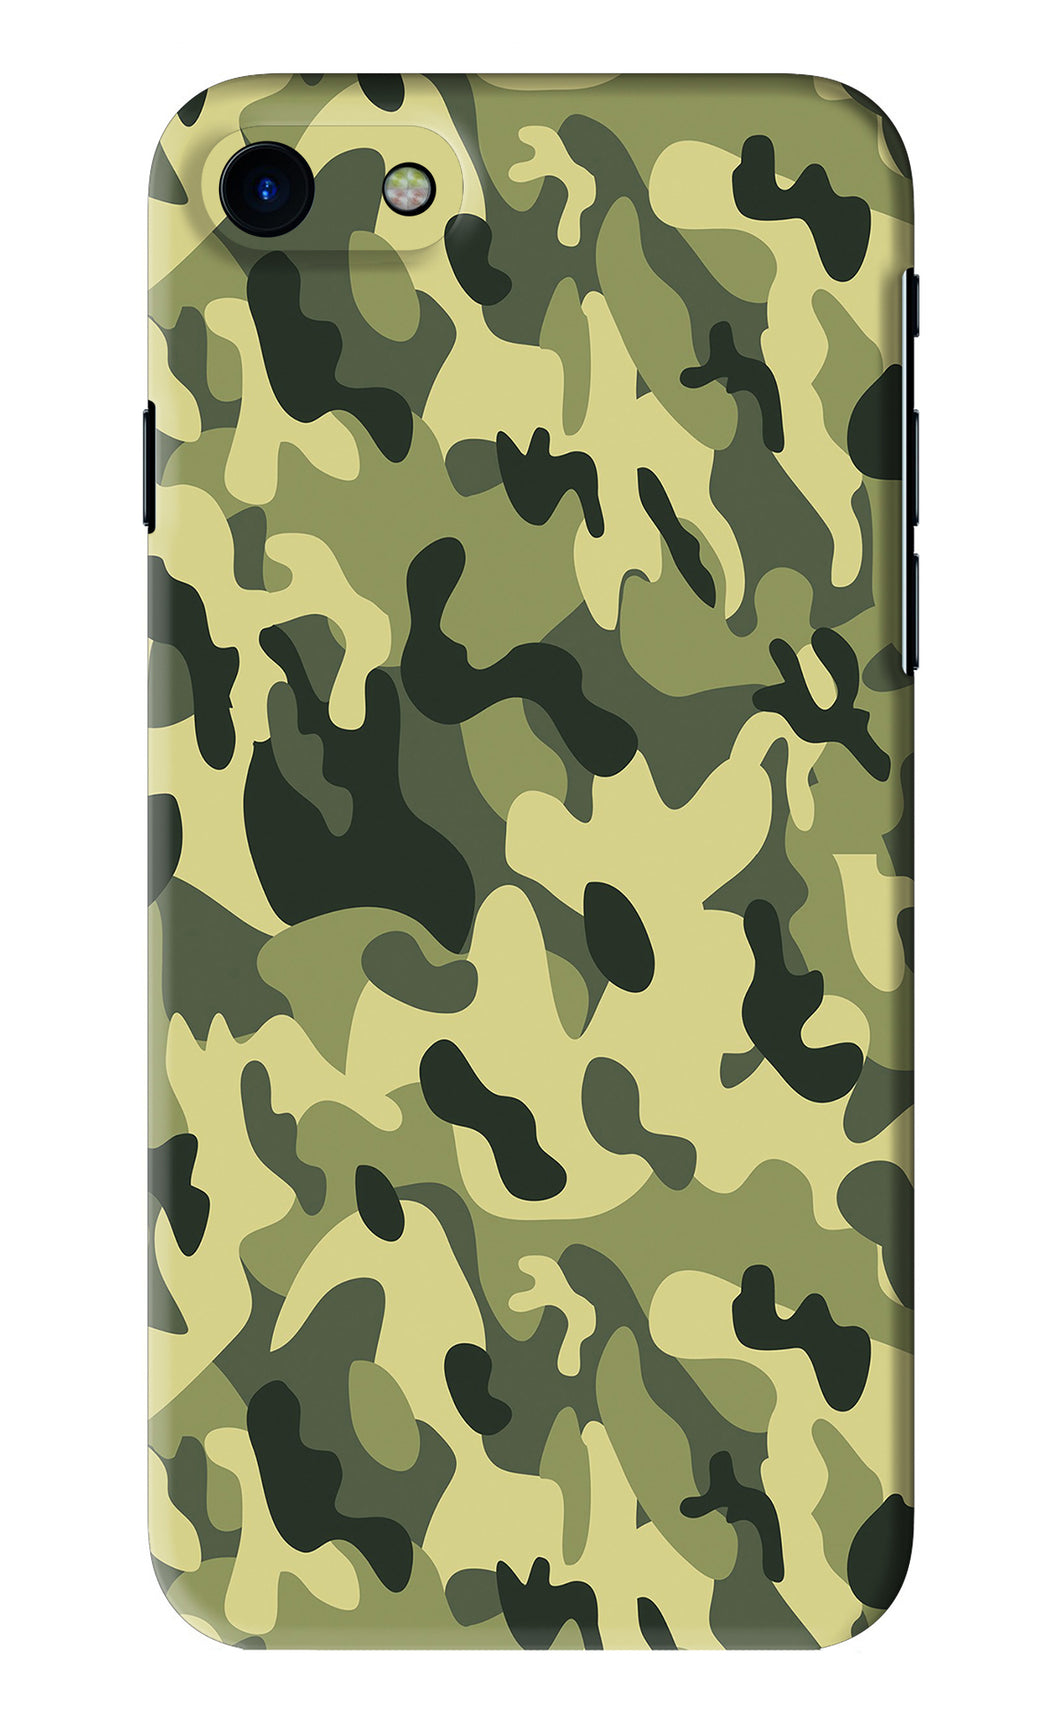 Camouflage iPhone 8 Back Skin Wrap